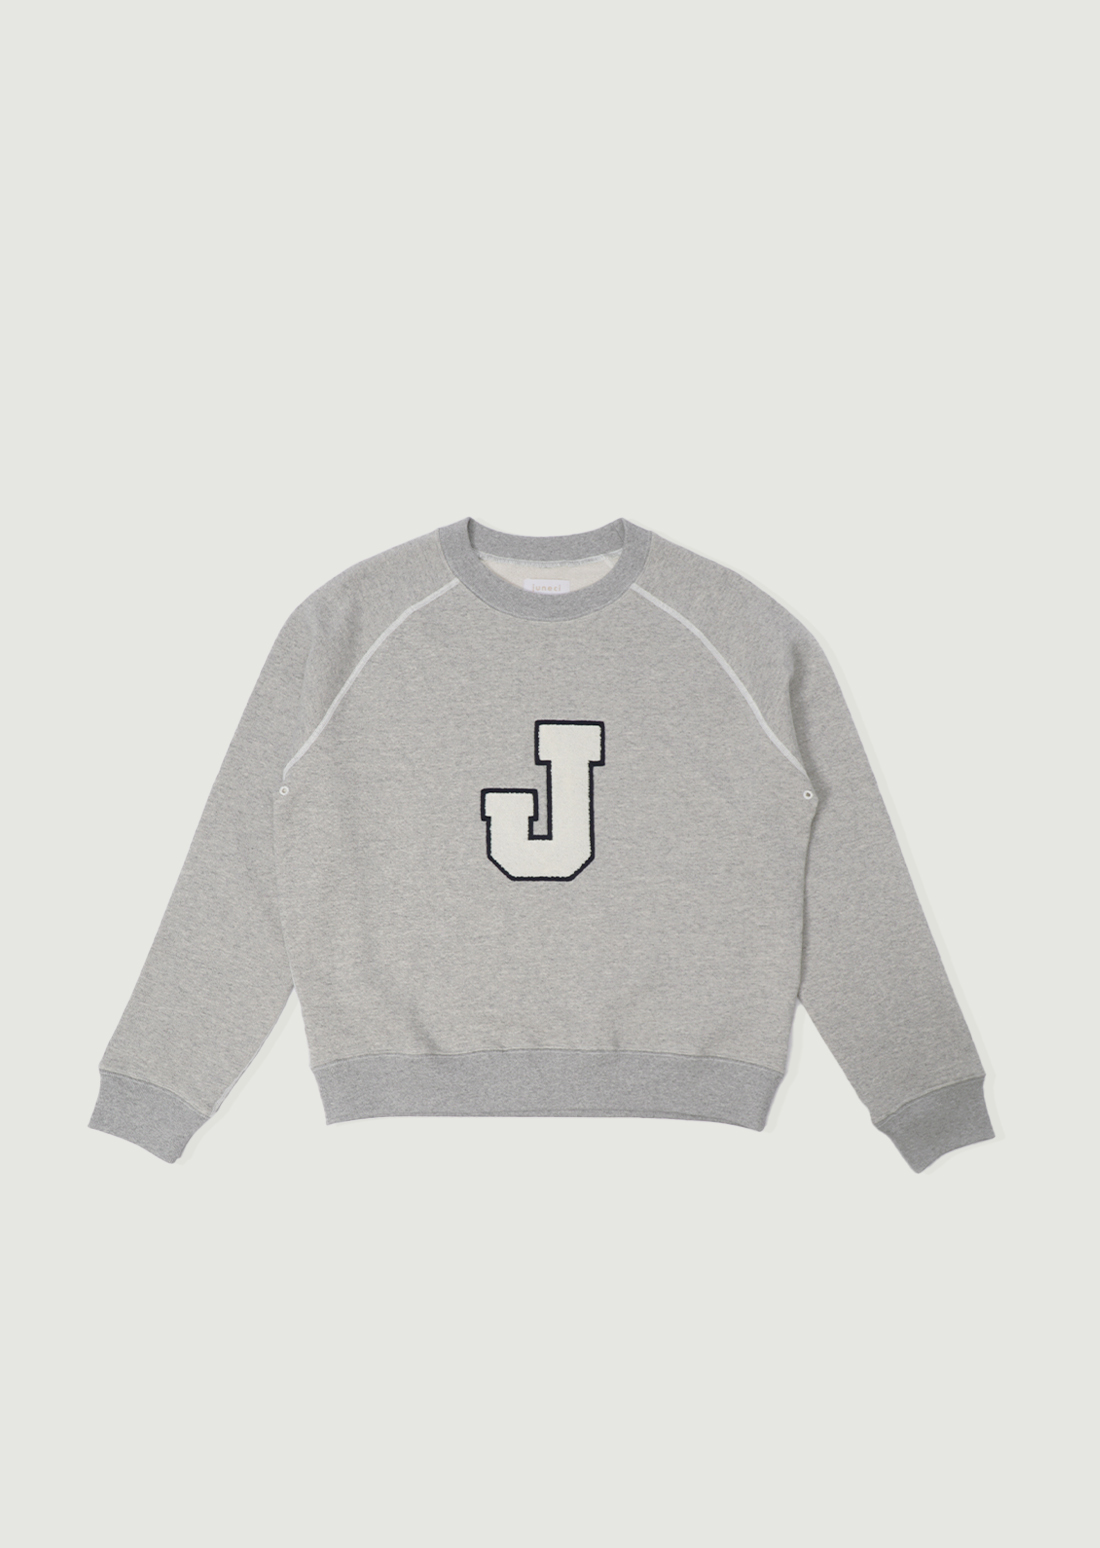 J Initial sweatshirts